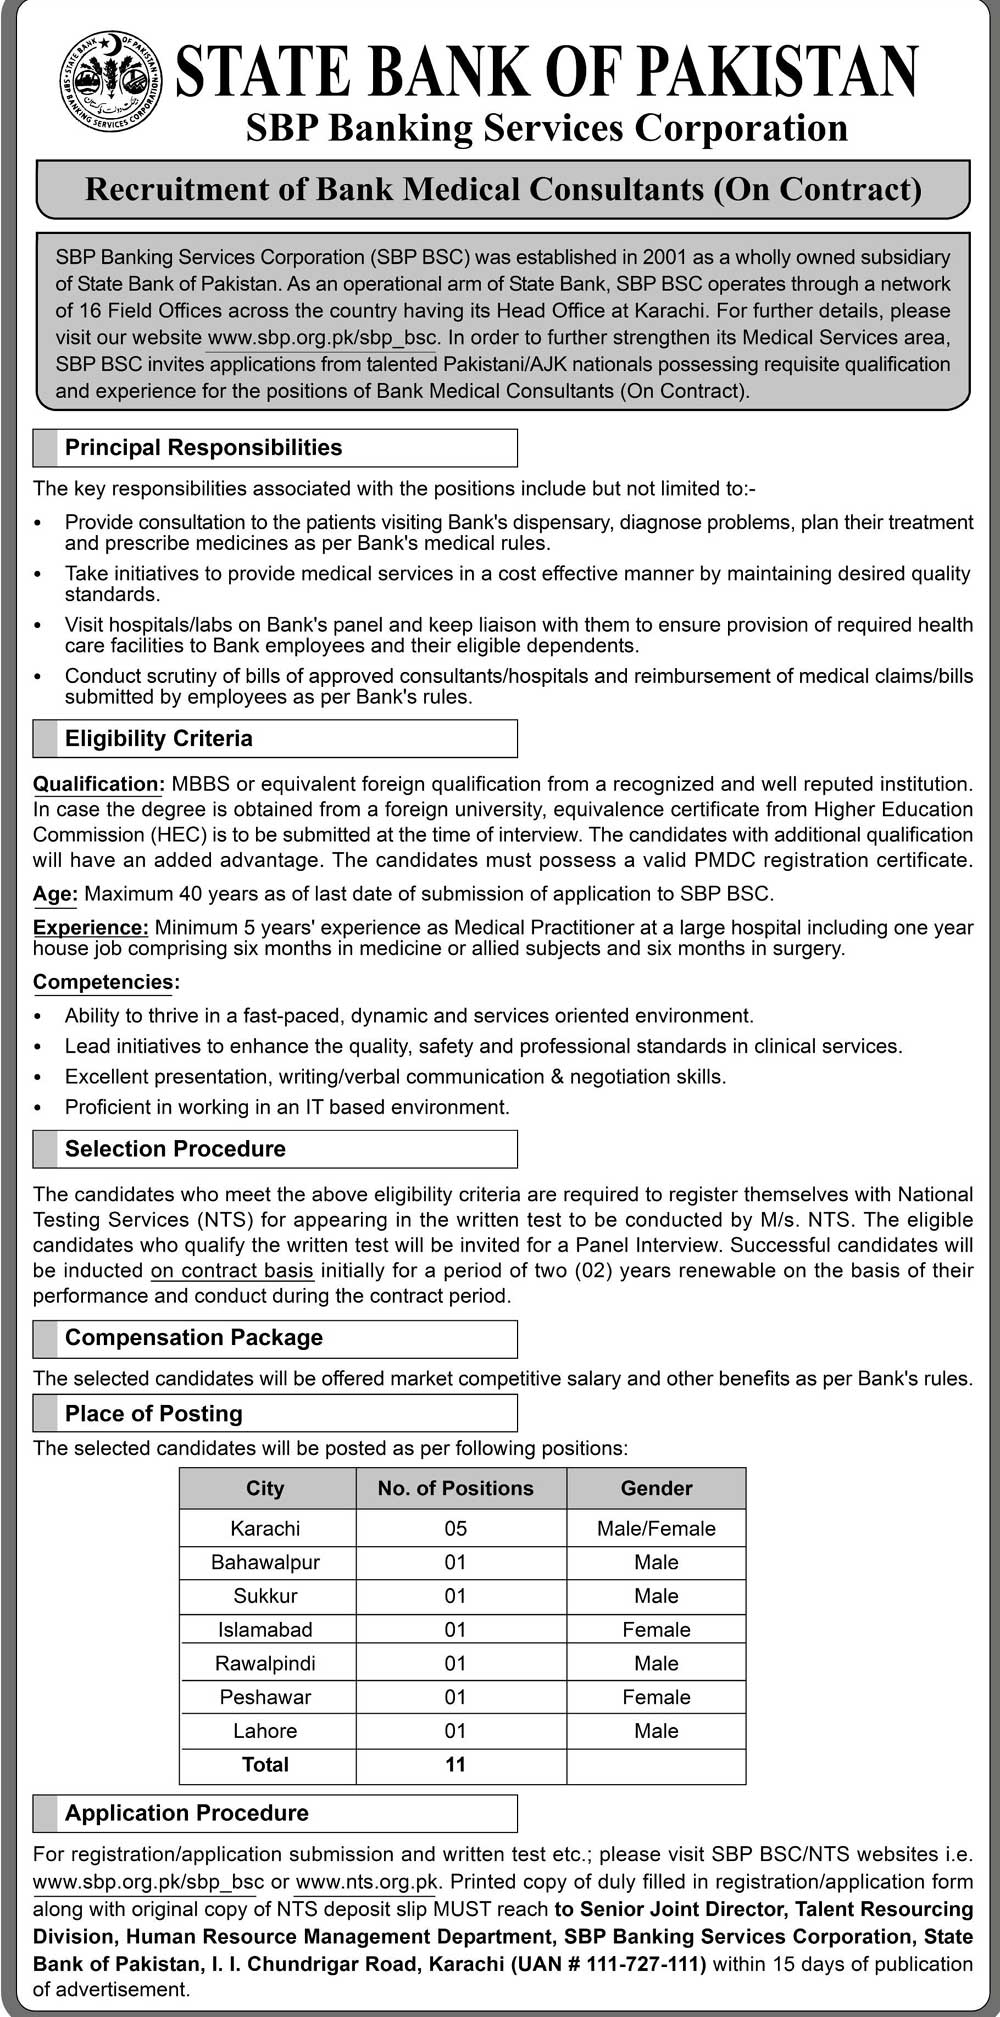 State Bank of Pakistan jobs 2019